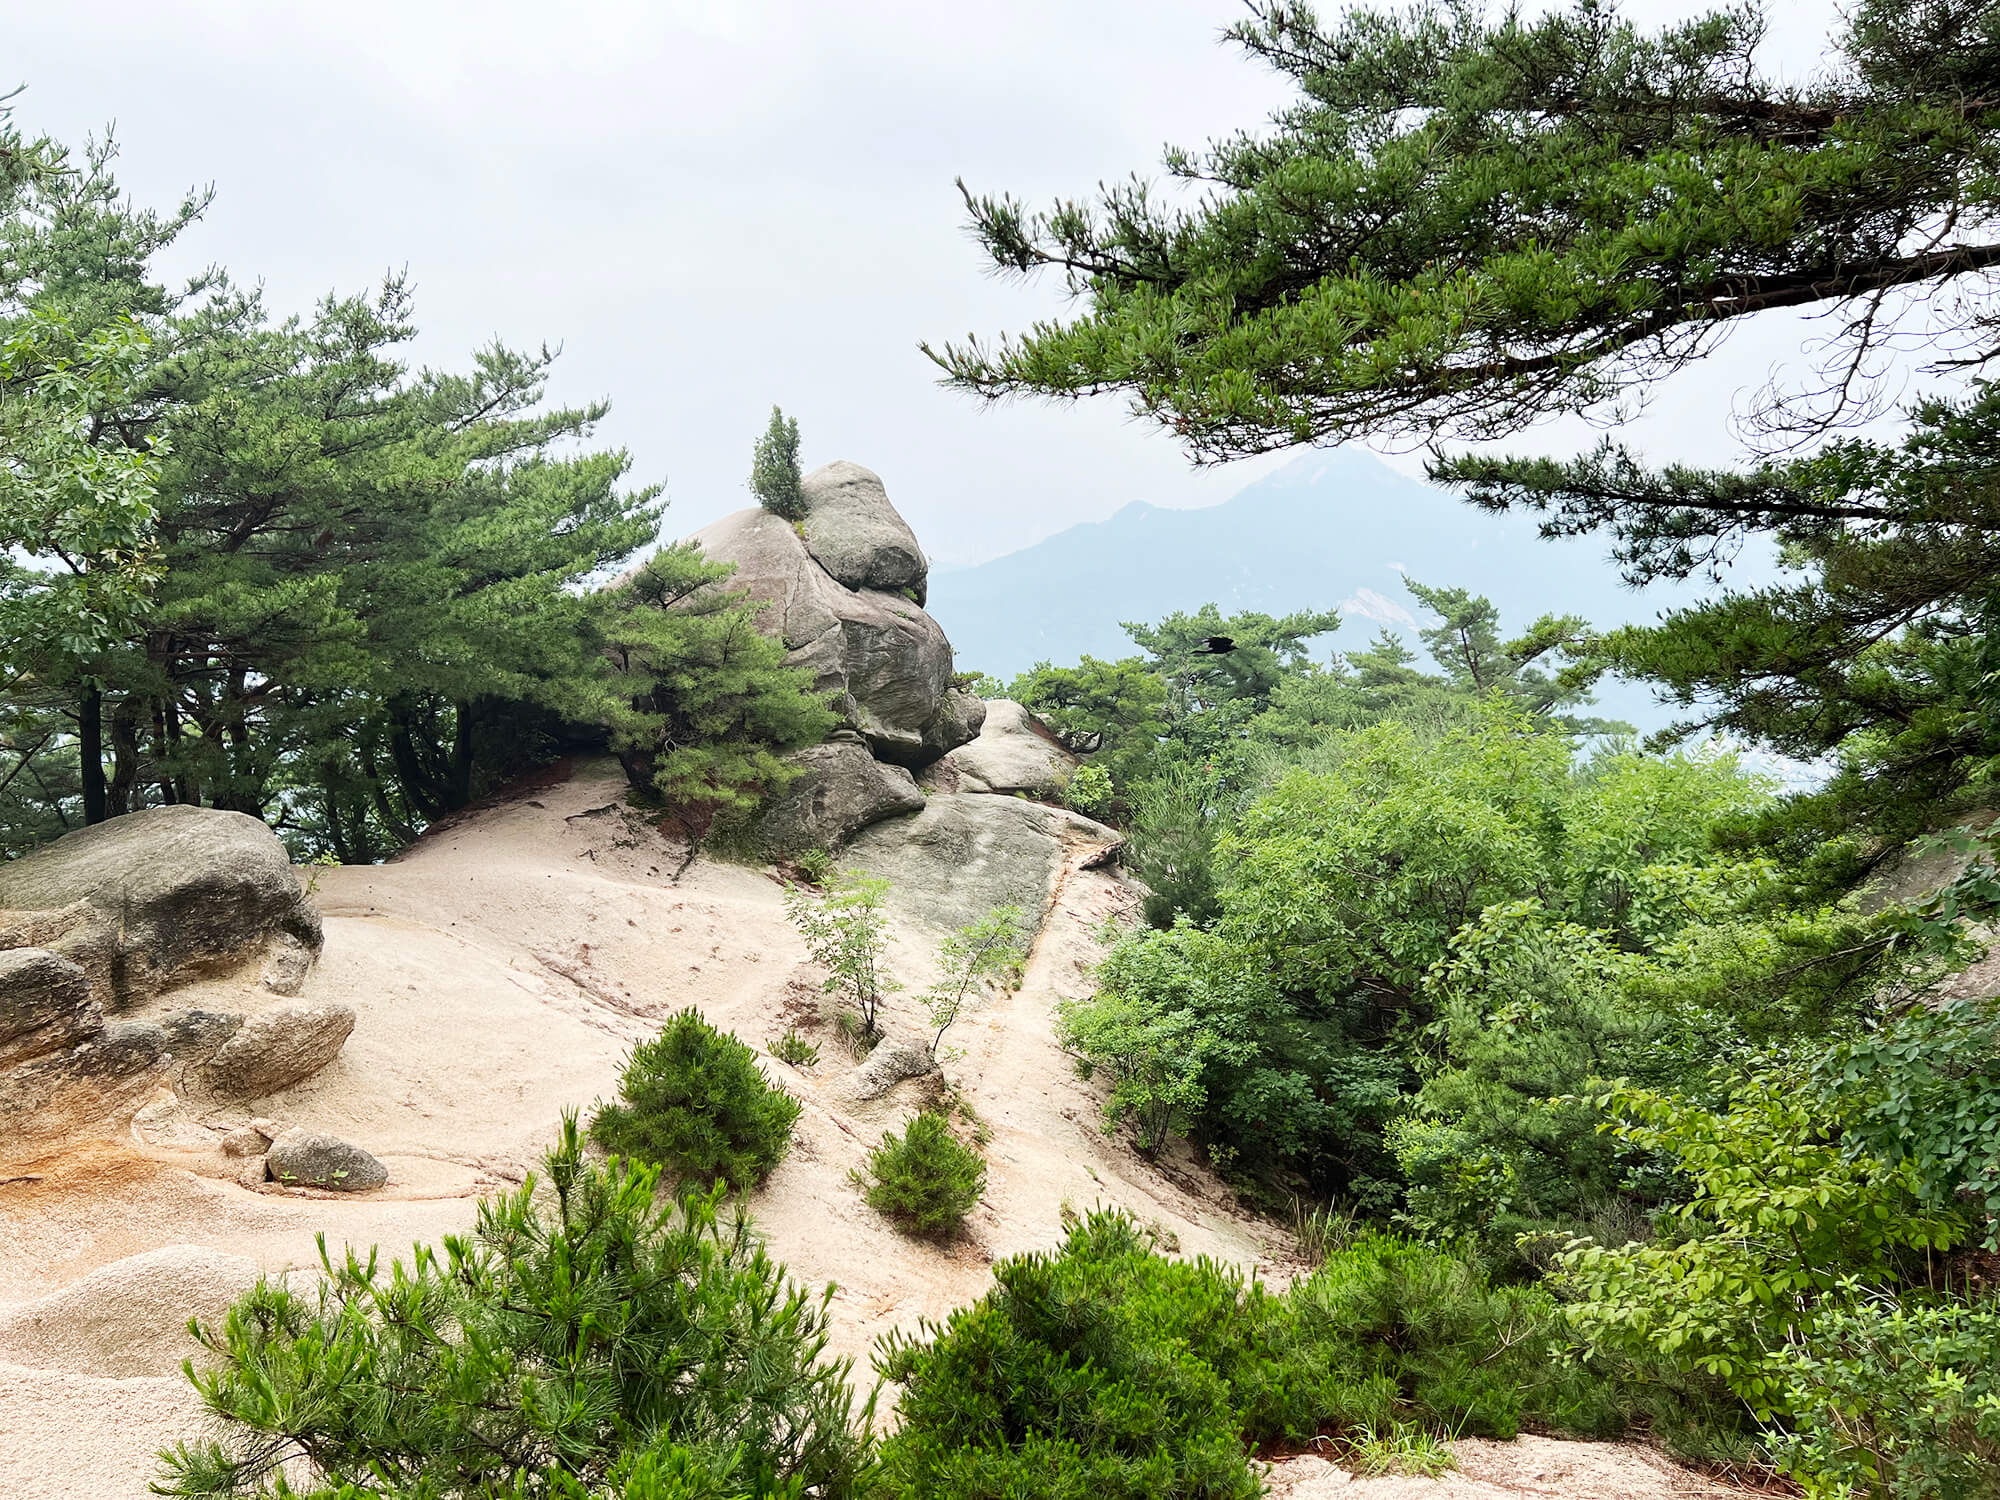 Seoul: Suraksan - A hike to the top